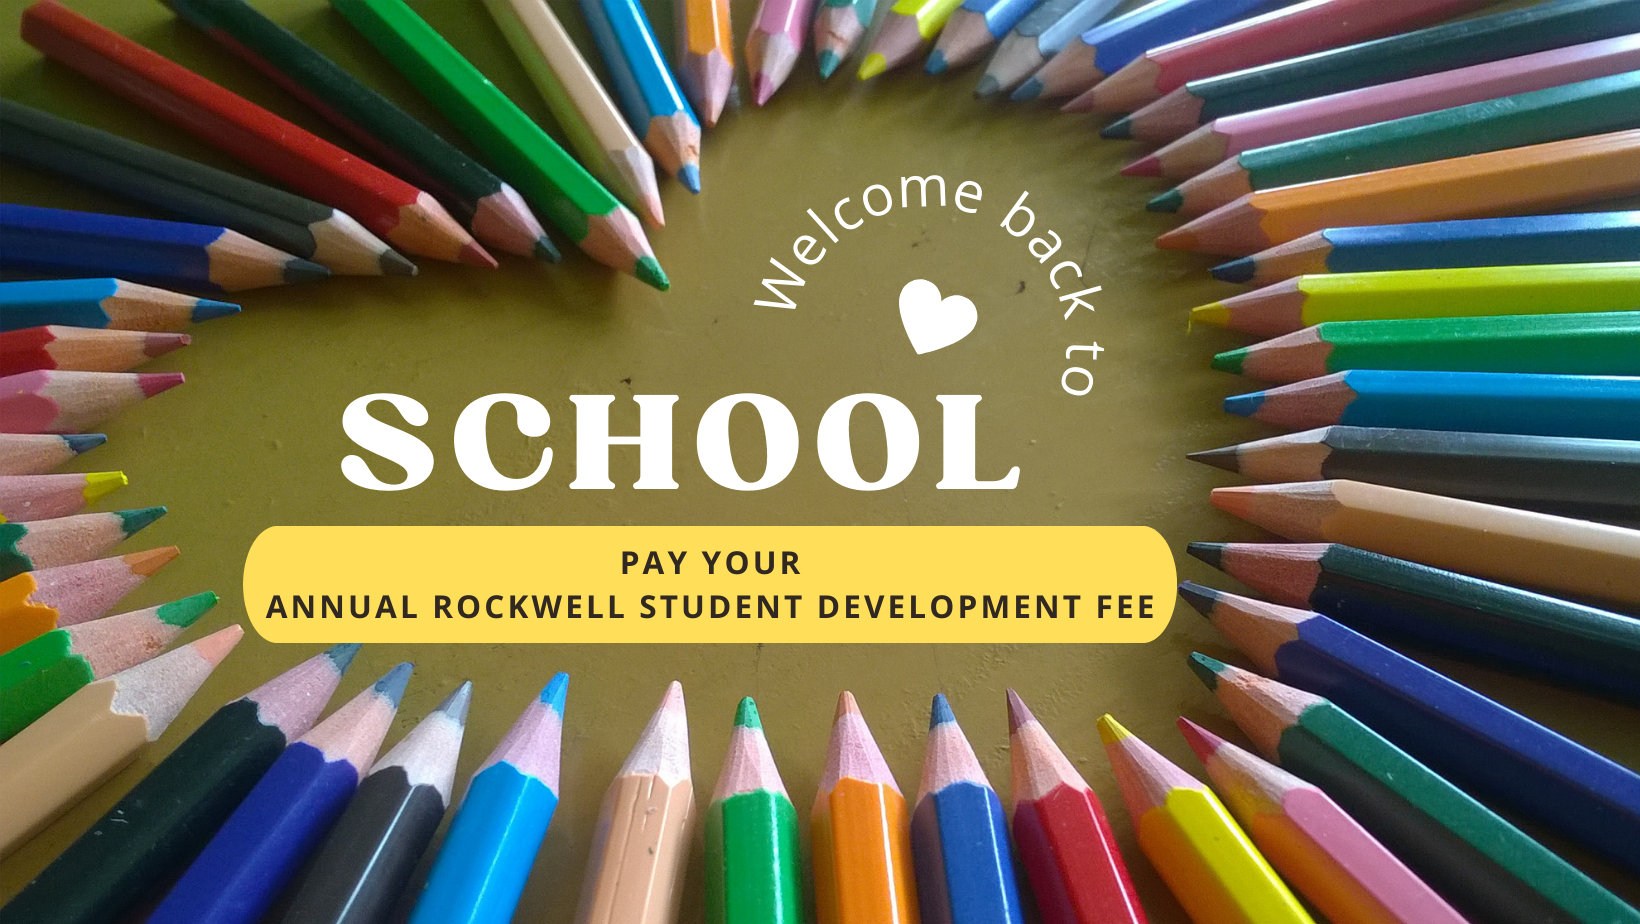 Annual Rockwell Student Development Fee